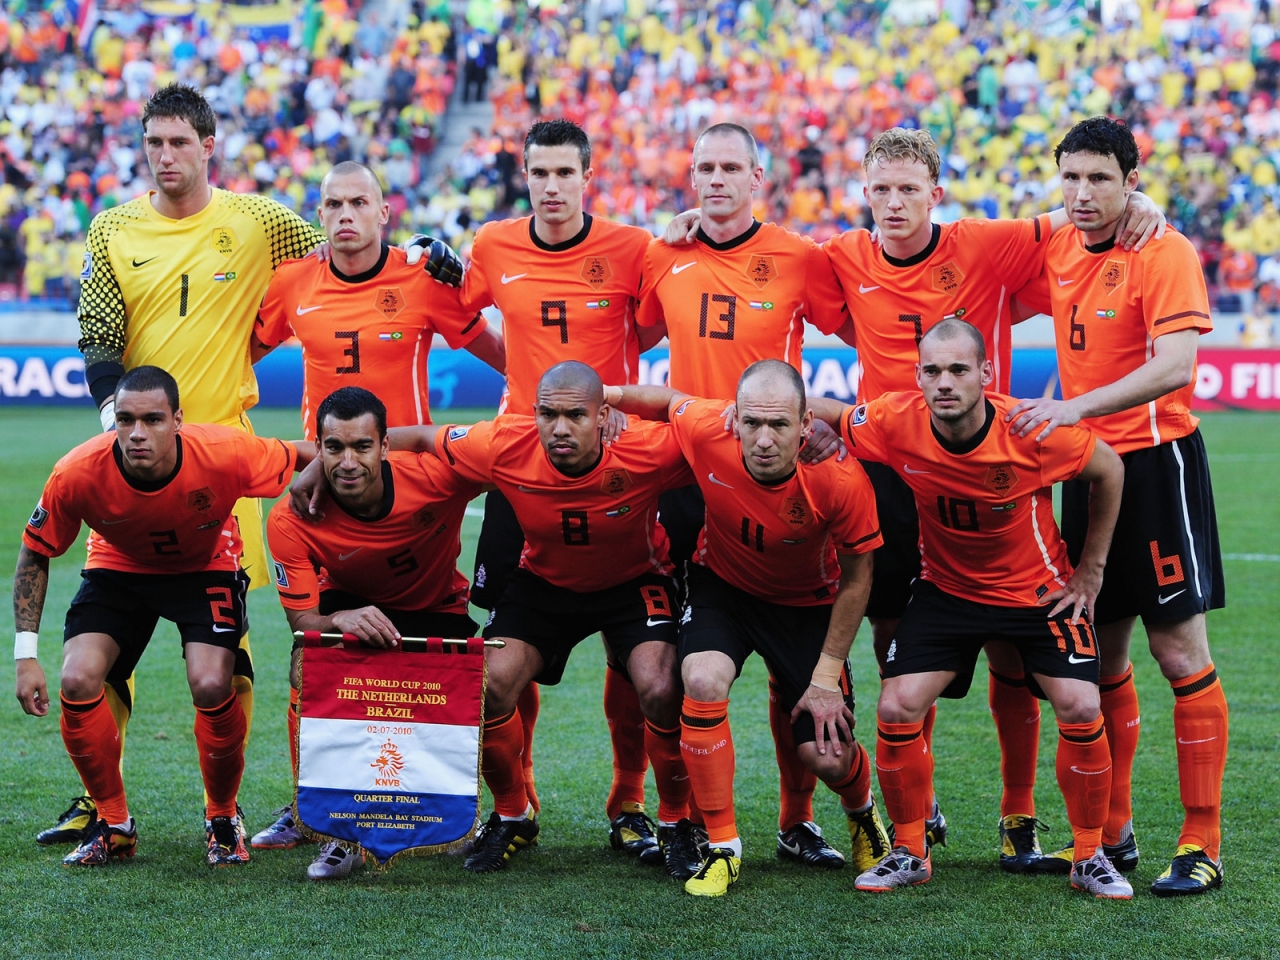 Football Holland Team for 1280 x 960 resolution